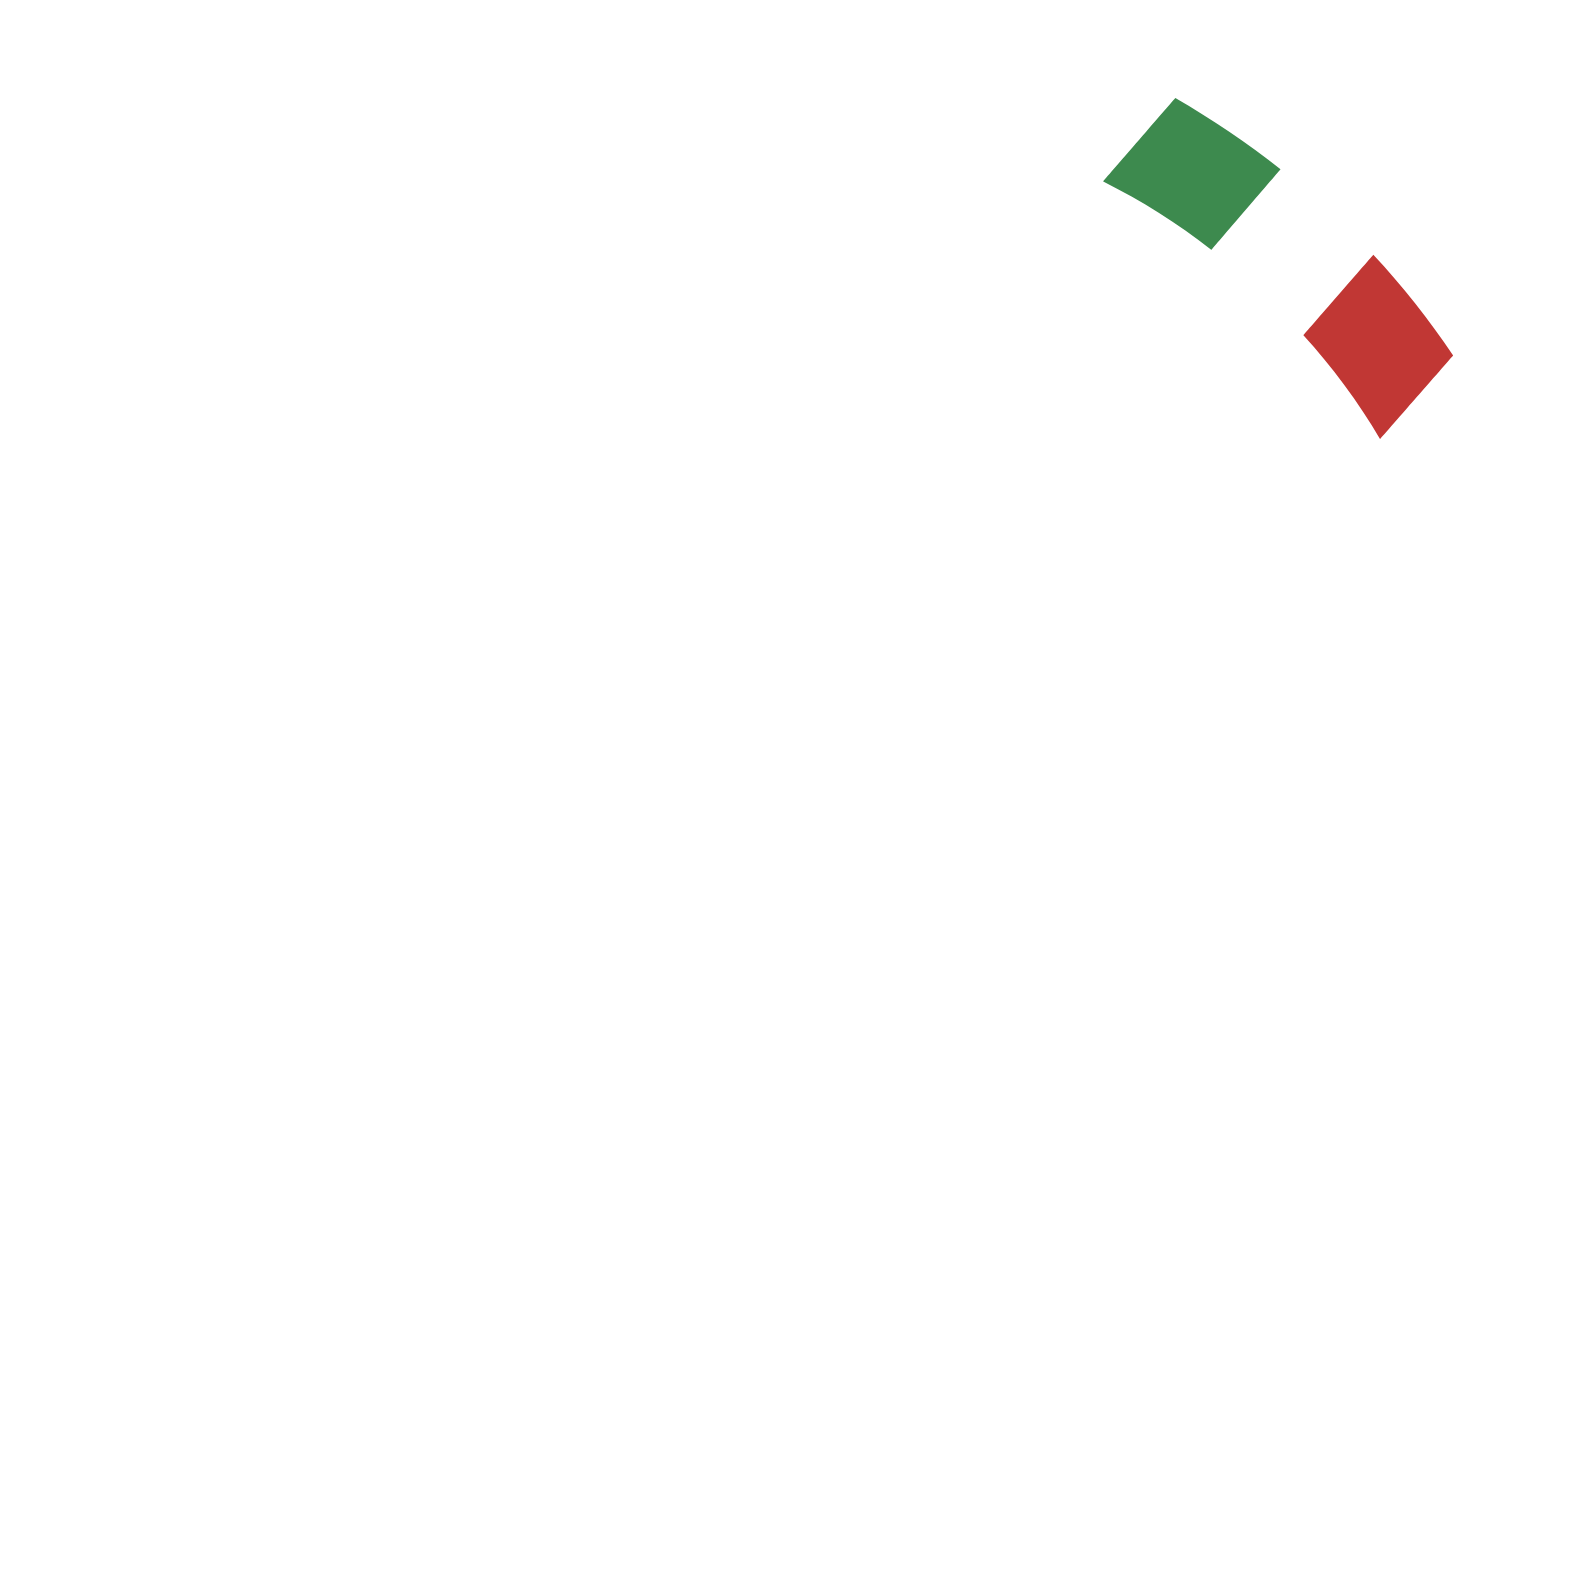 Technoprobe logo for dark backgrounds (transparent PNG)